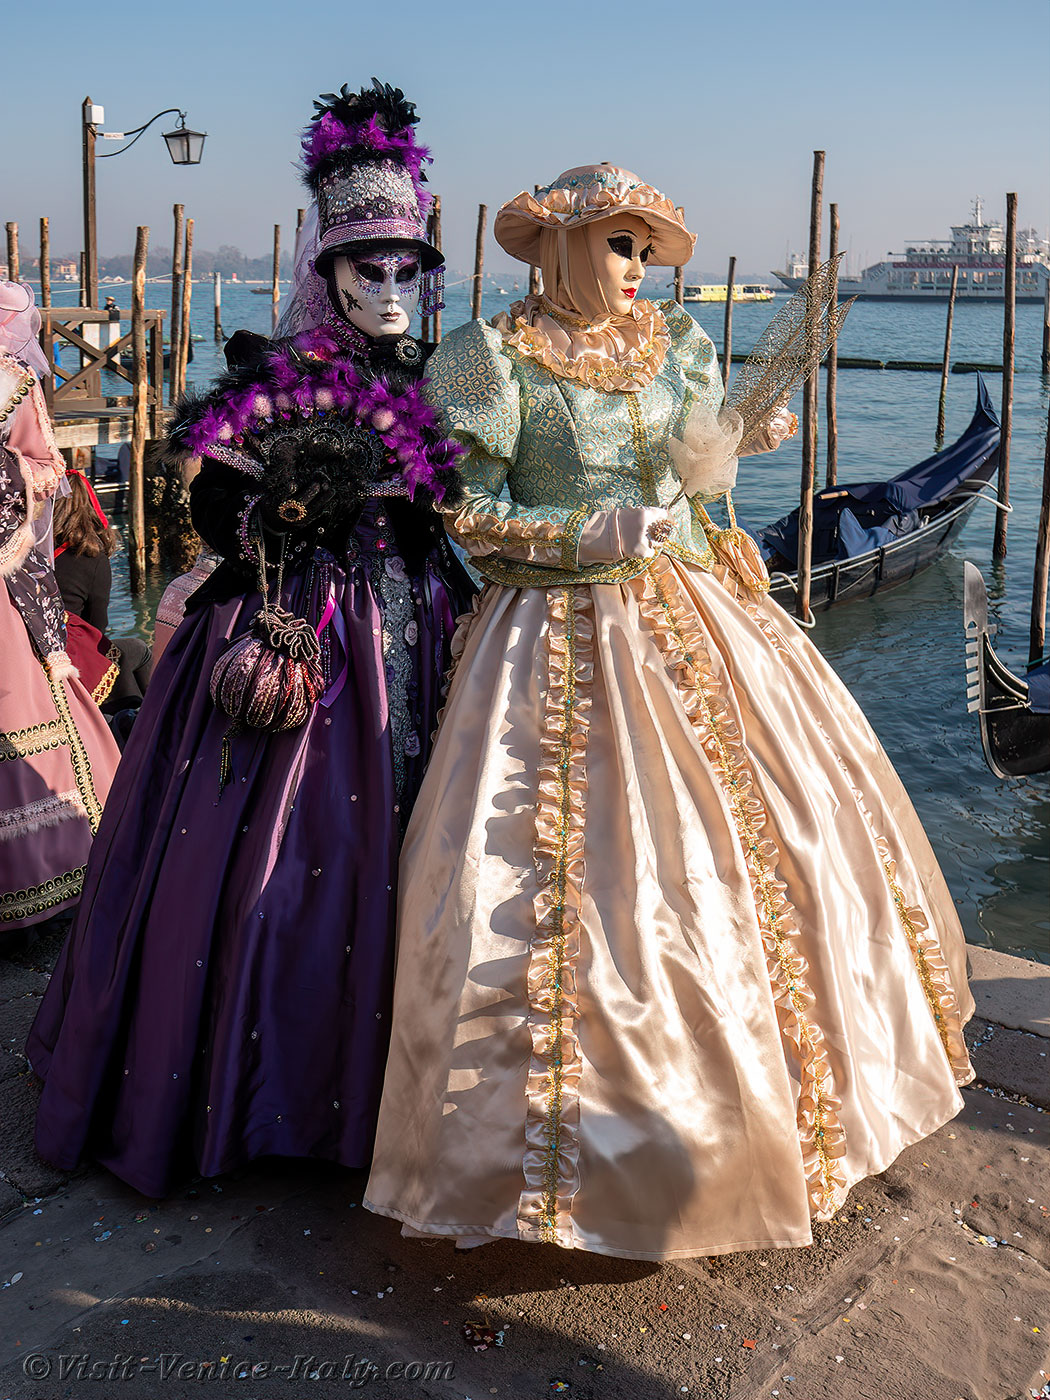 Venetian carnival costume for women - Leg Avenue. The coolest